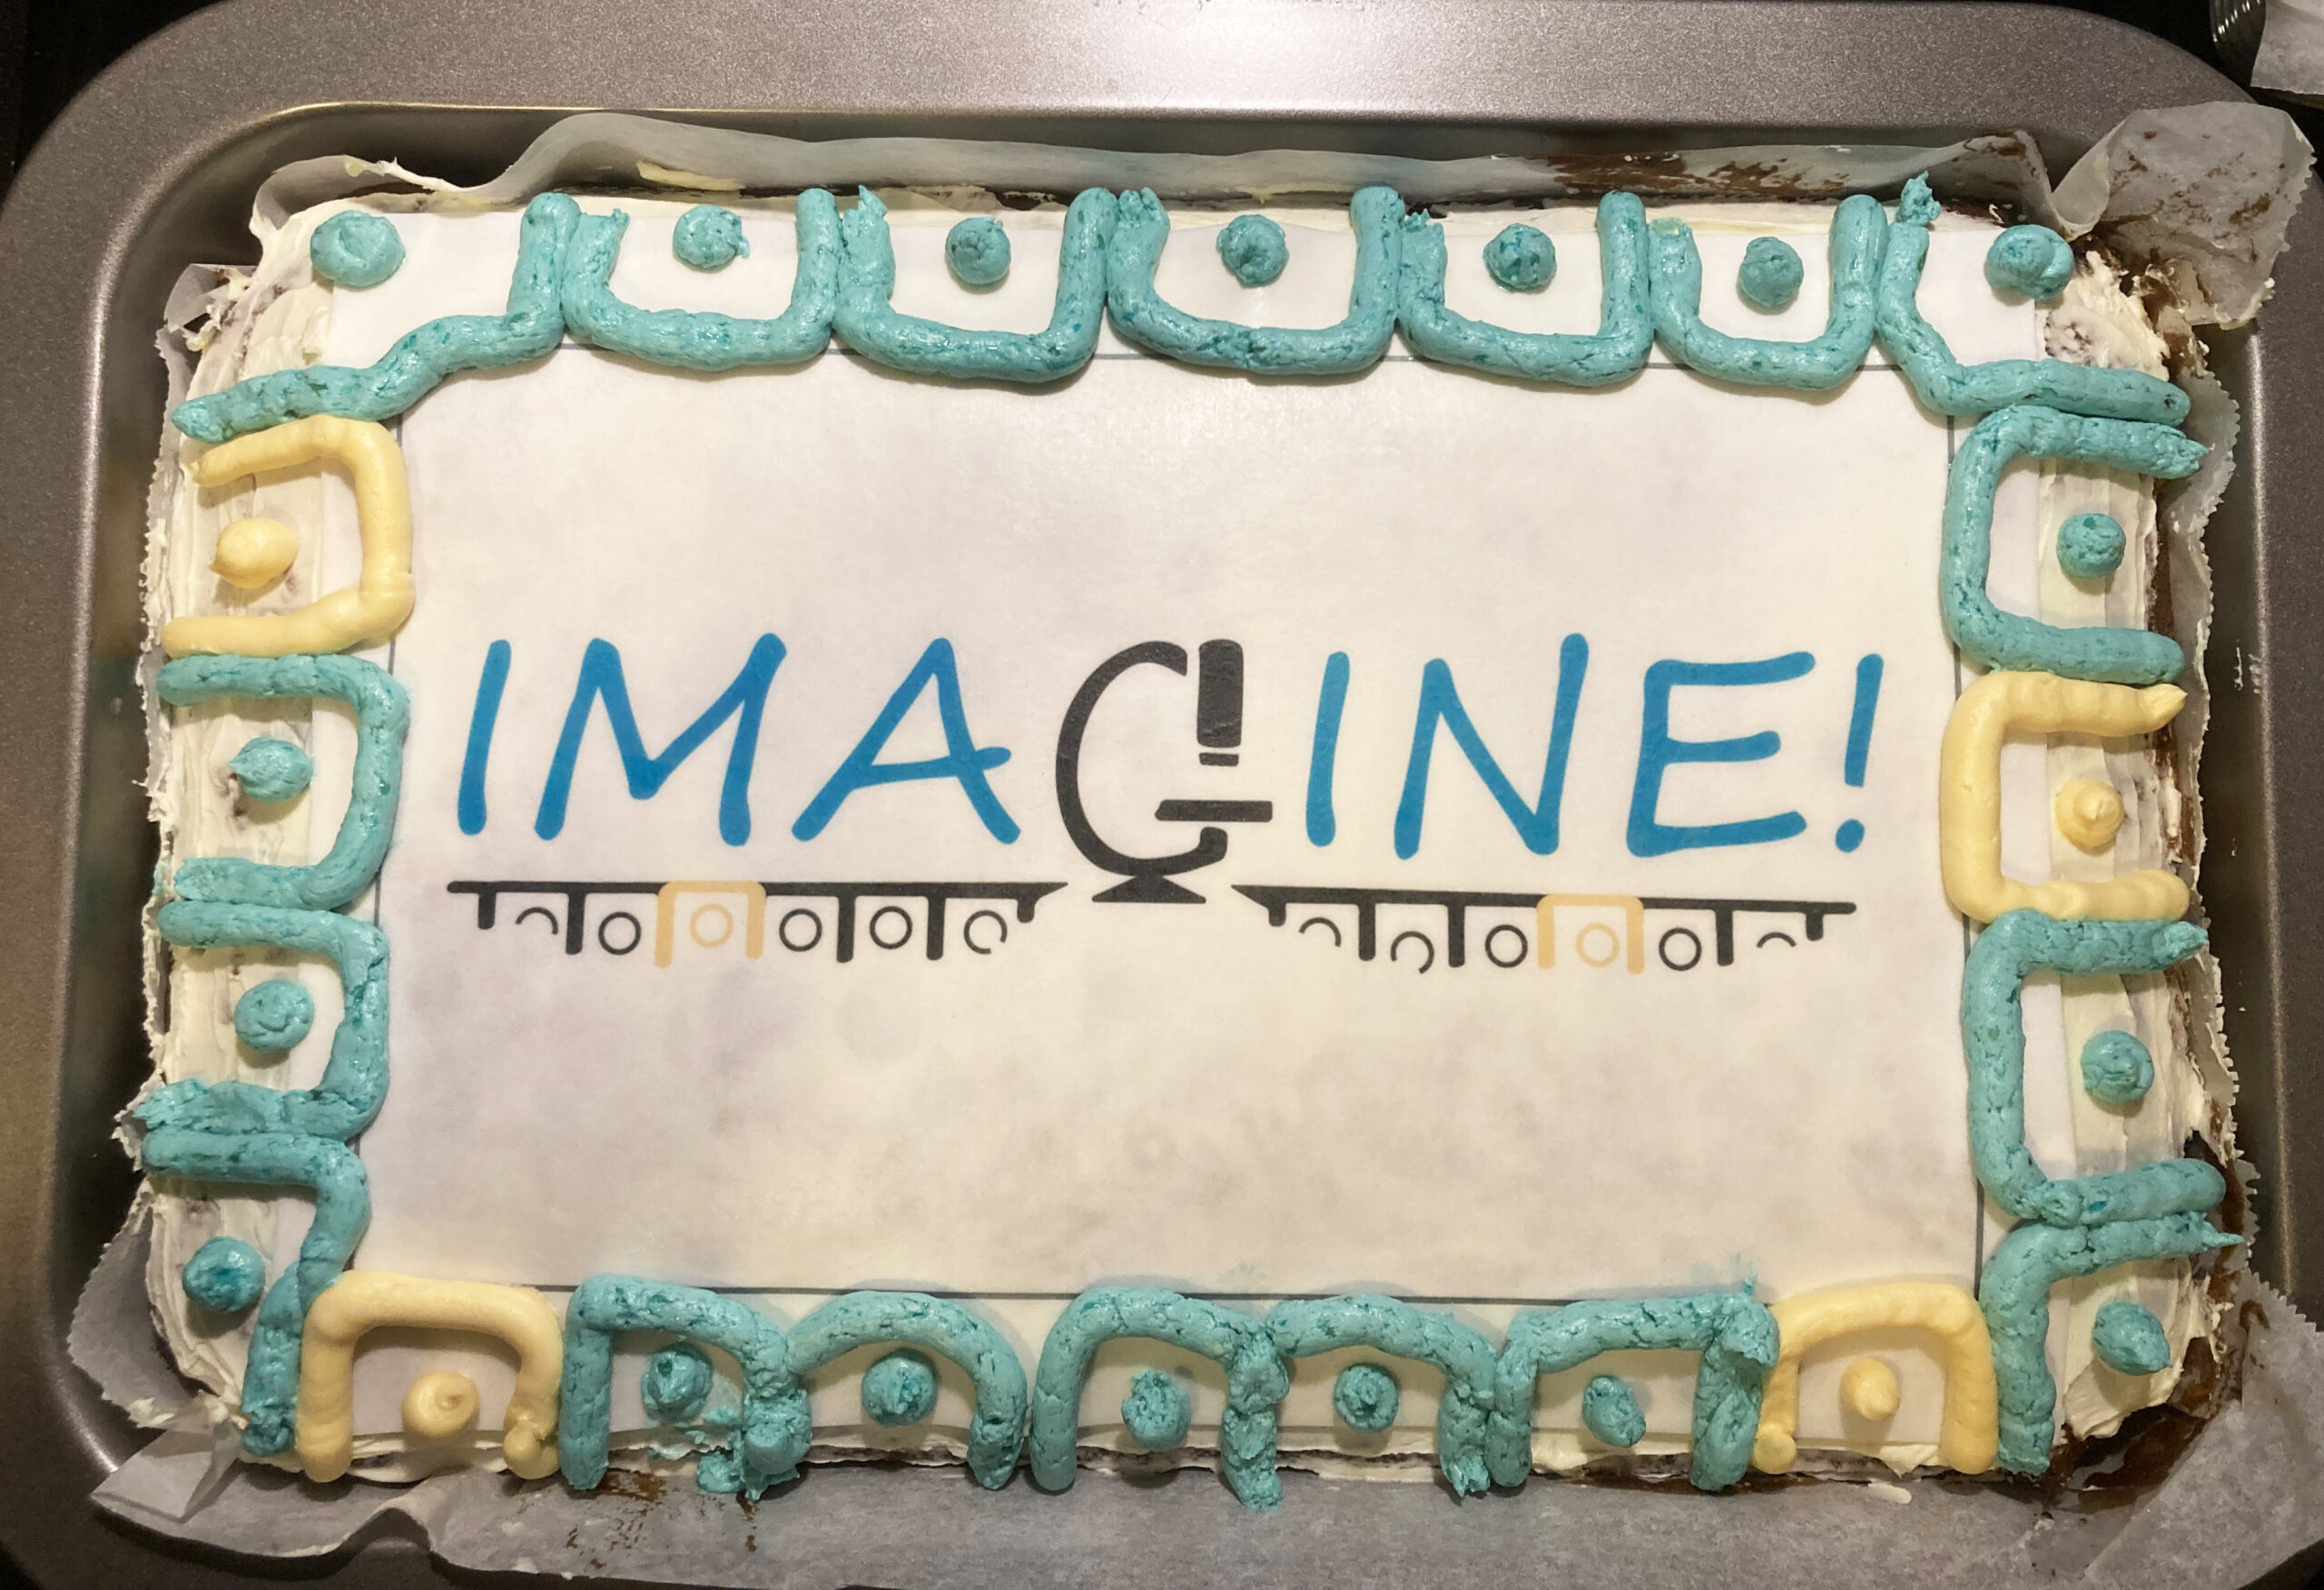 IMAGINE! logo cake